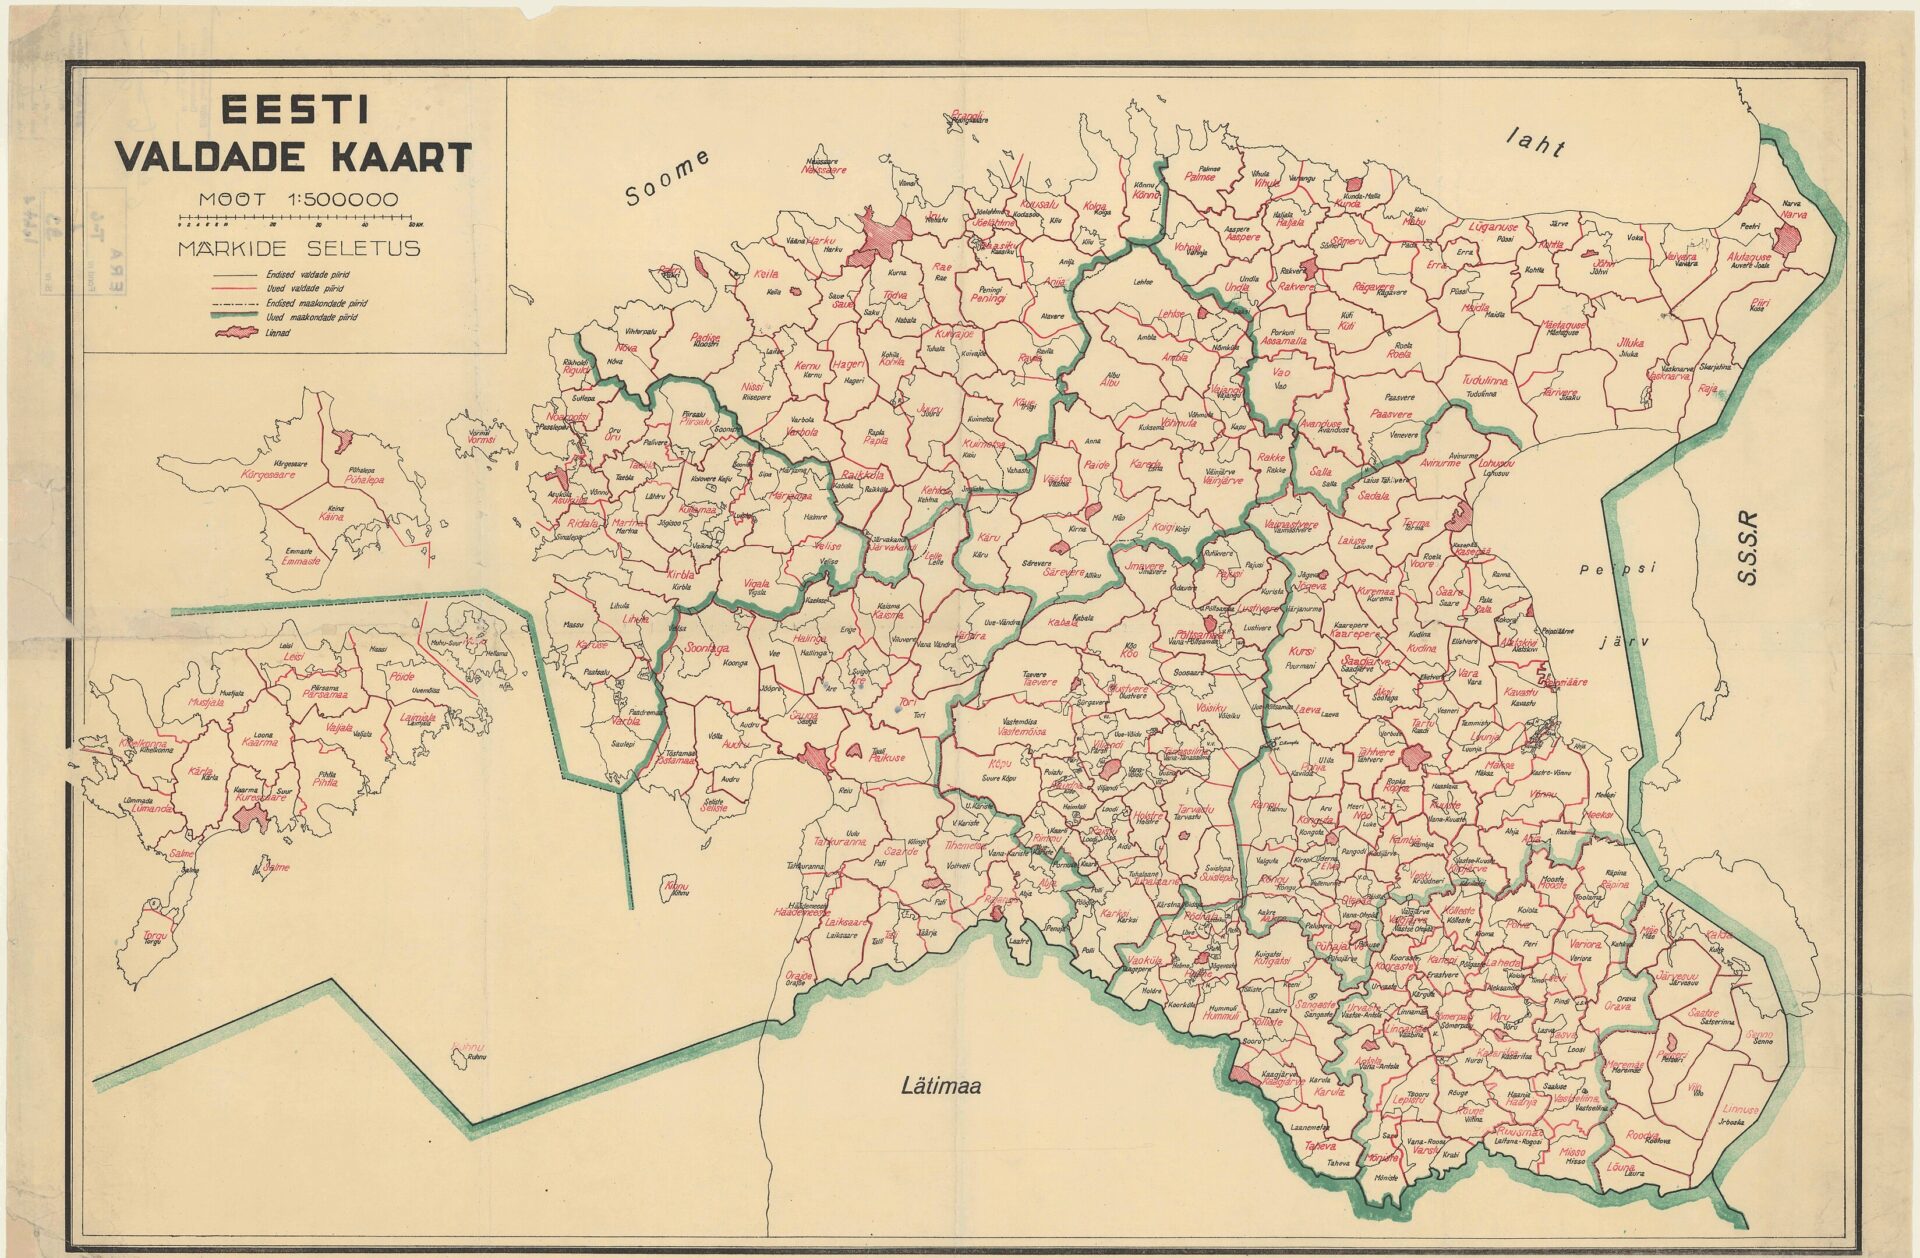 Eesti valdade kaart, 1936